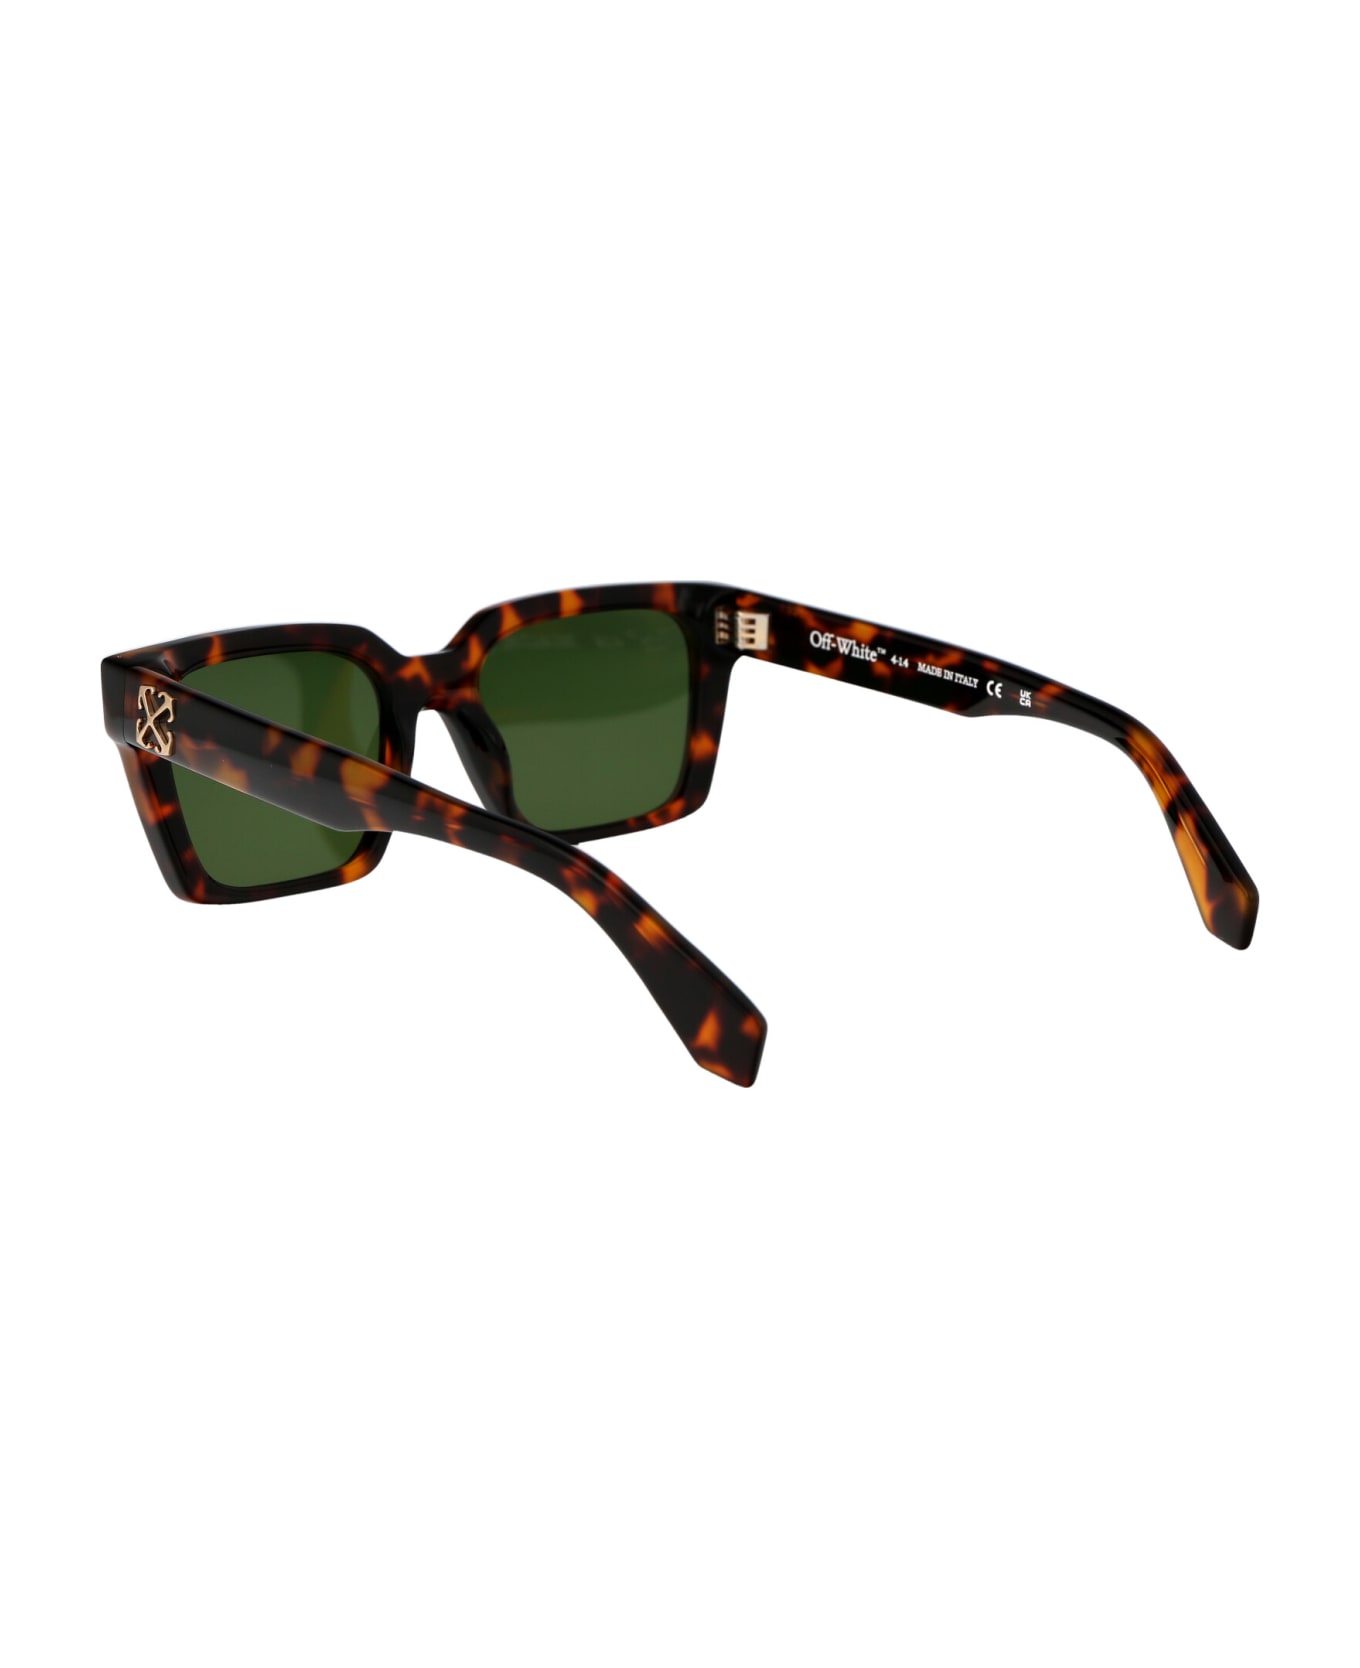 Off-White Branson Sunglasses - 6055 HAVANA